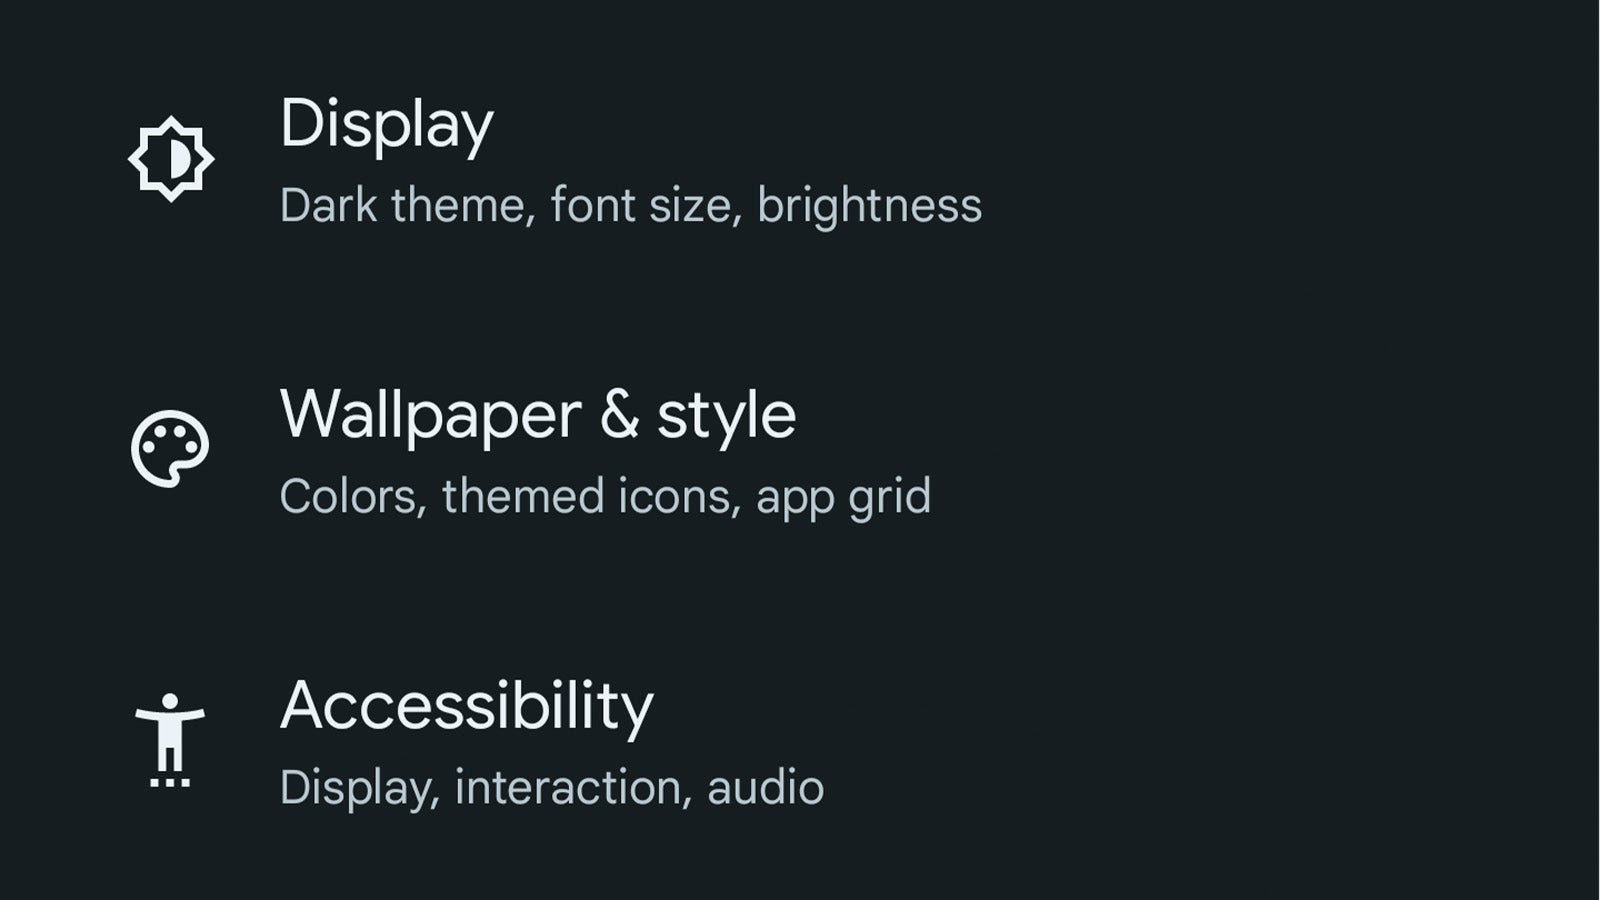 Wallpaper & Style menu in the Settings app